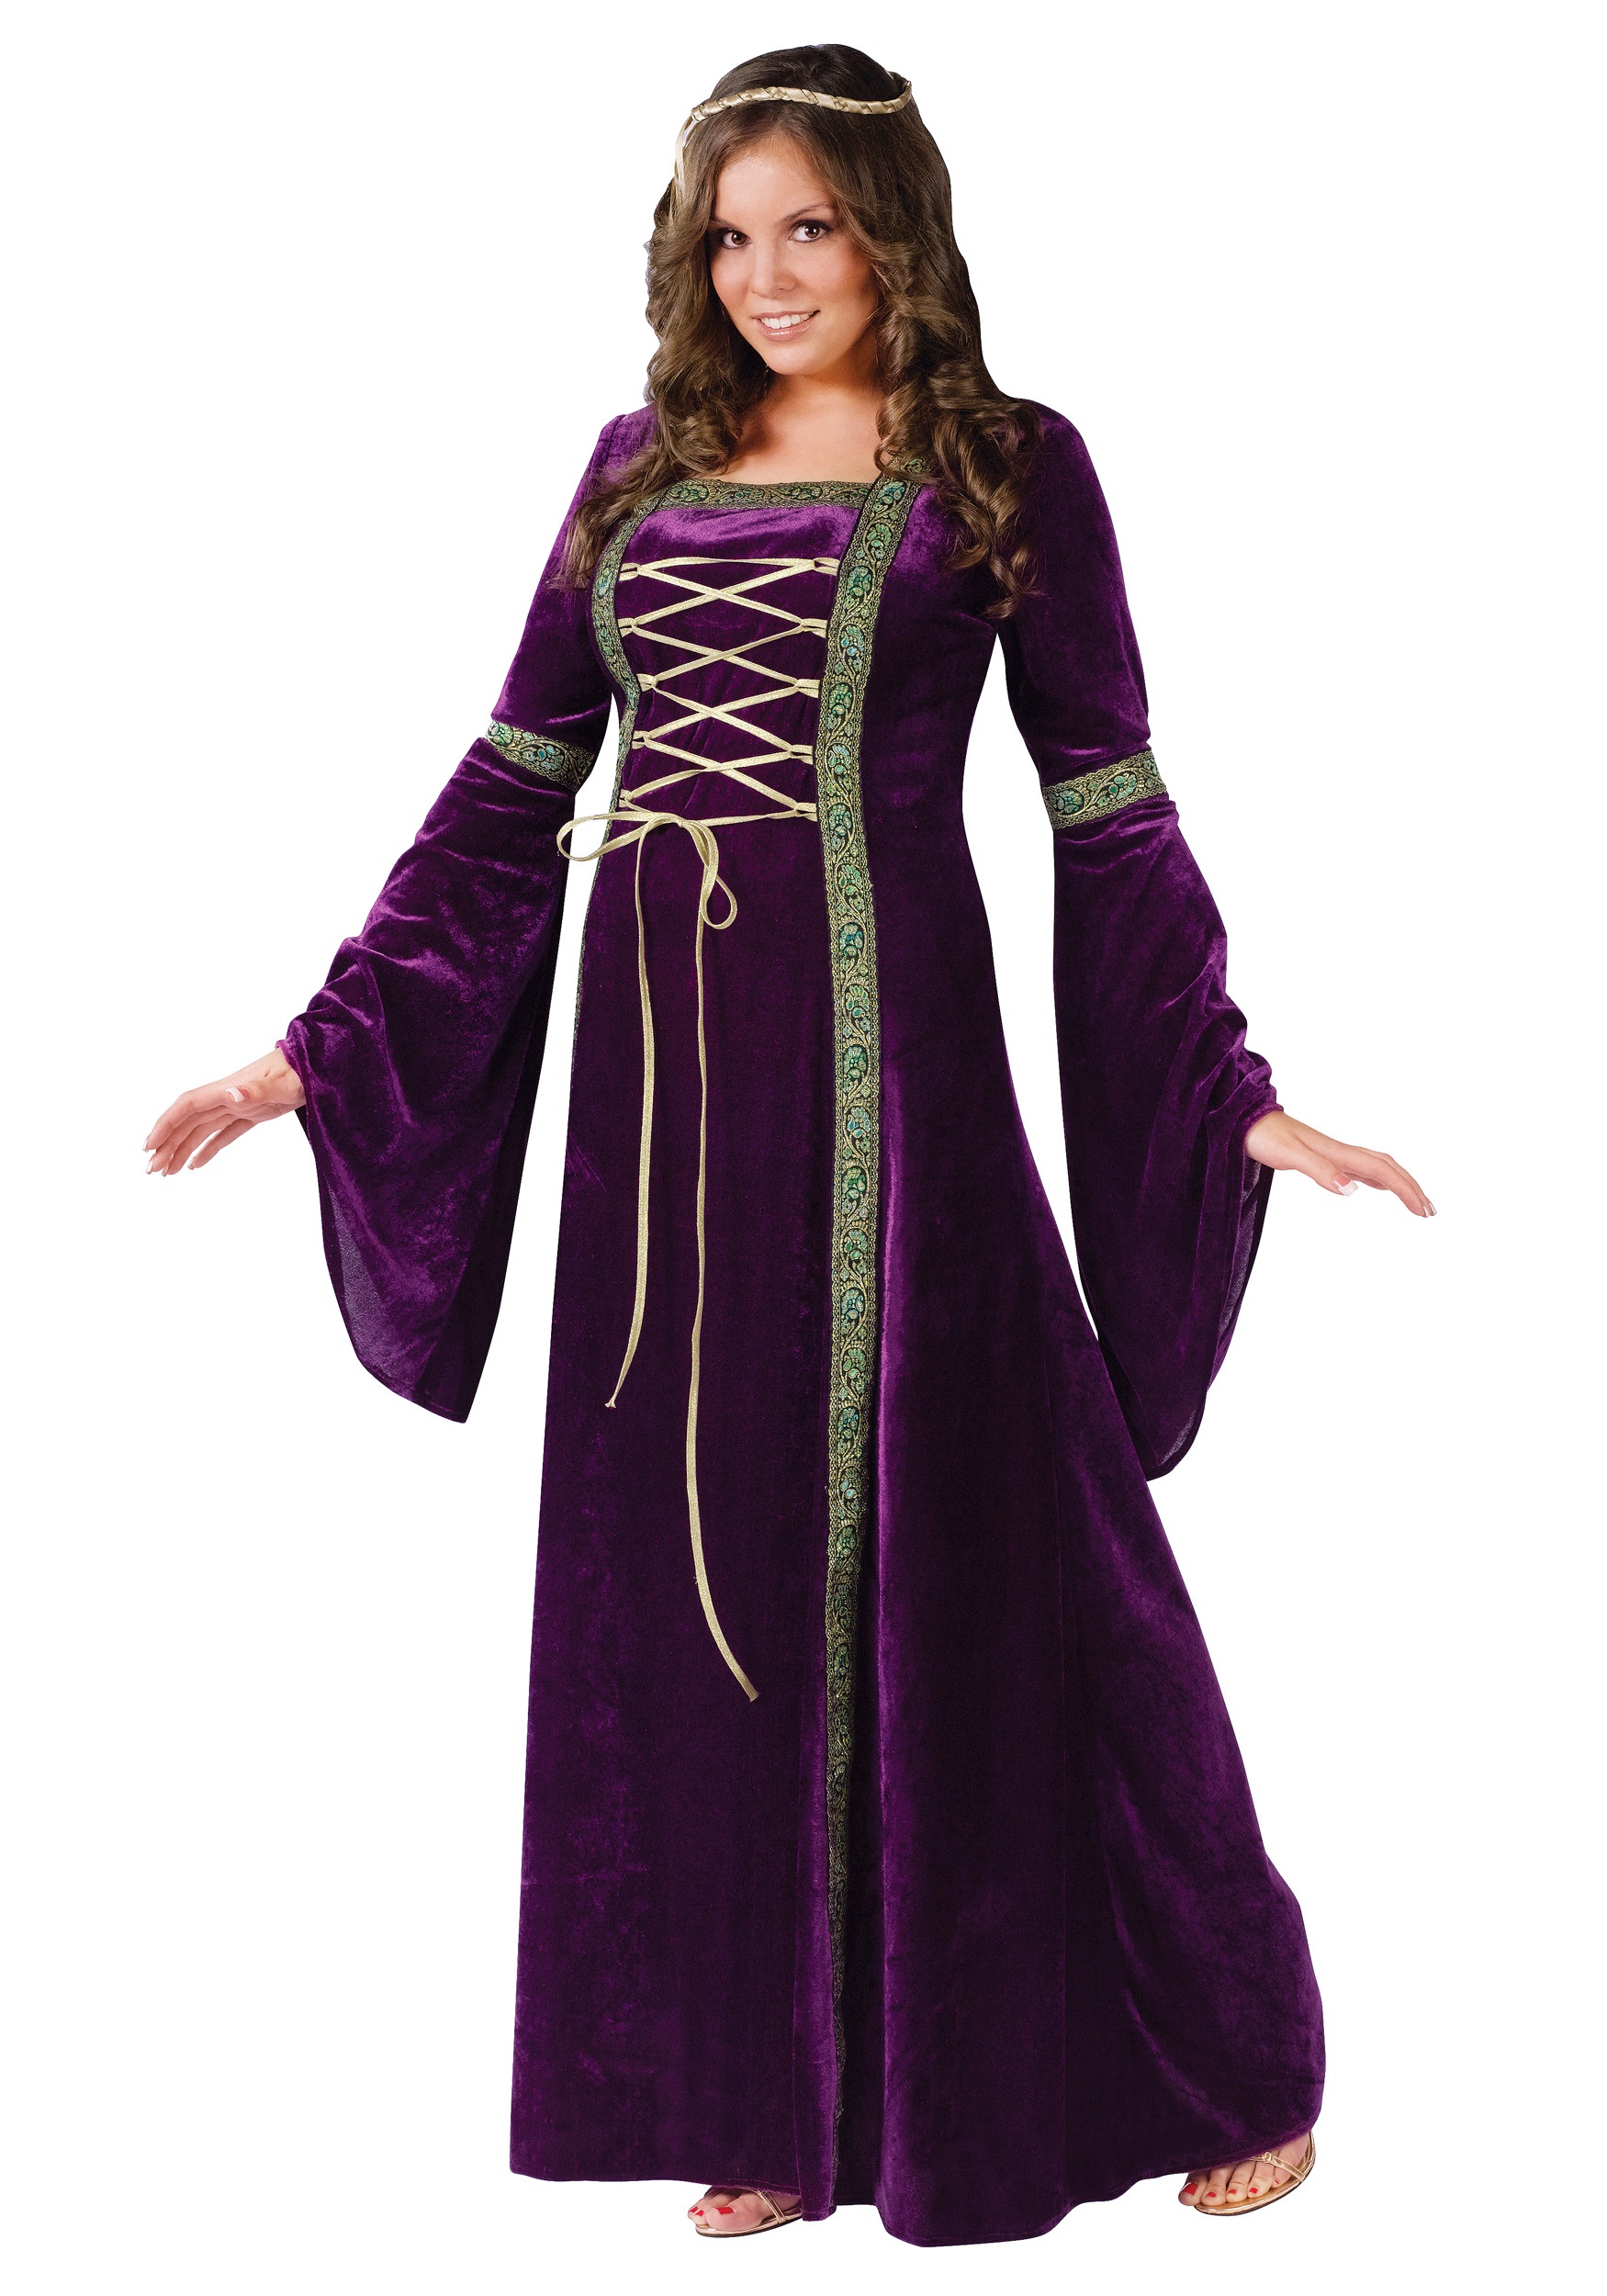 Image of Women's Plus Size Renaissance Lady Costume | Decade Costumes ID FU110015-5X